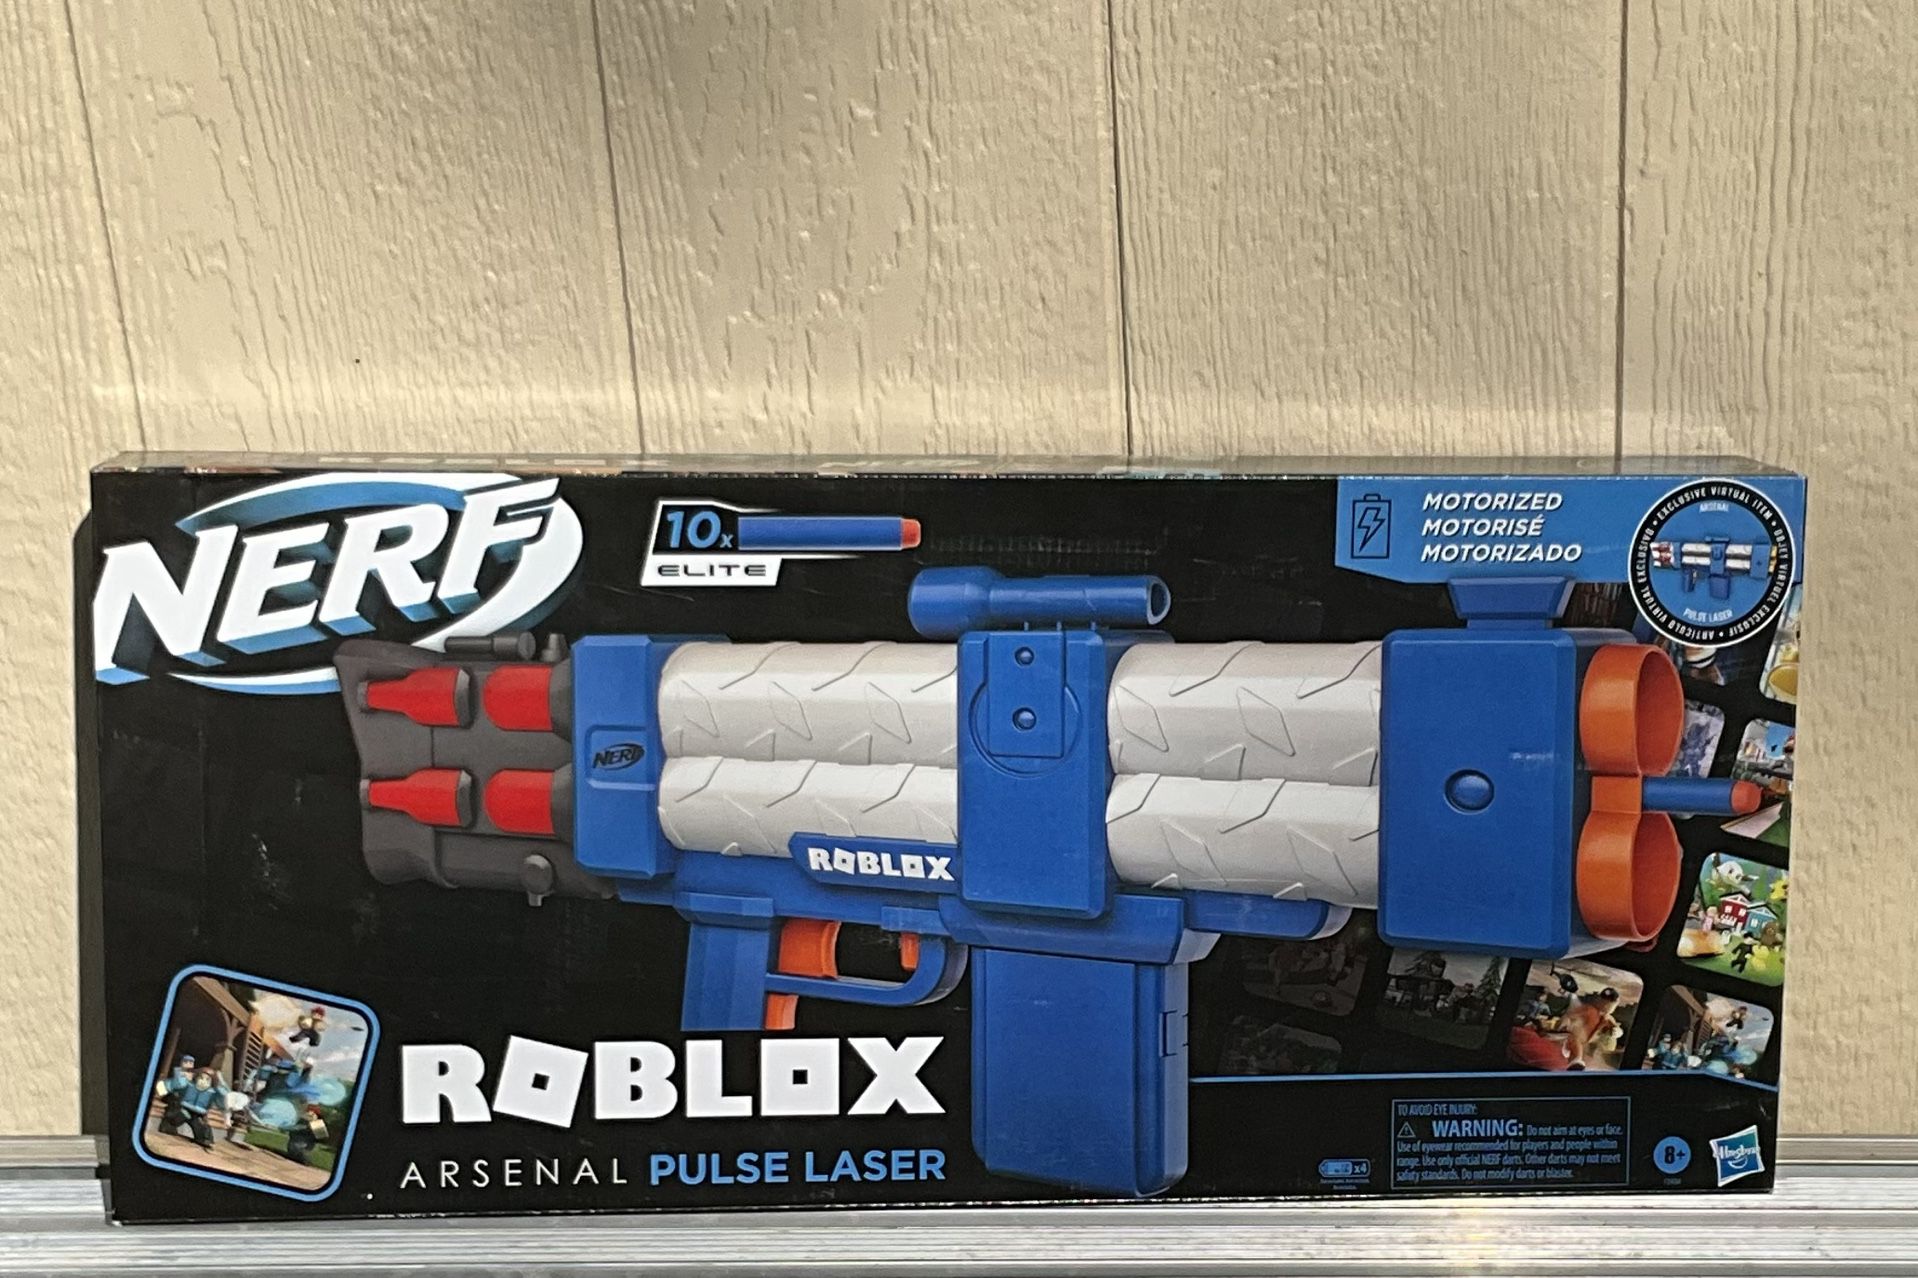 Roblox Pulse Laser Motorized Nerf Gun for Sale in Arlington, TX